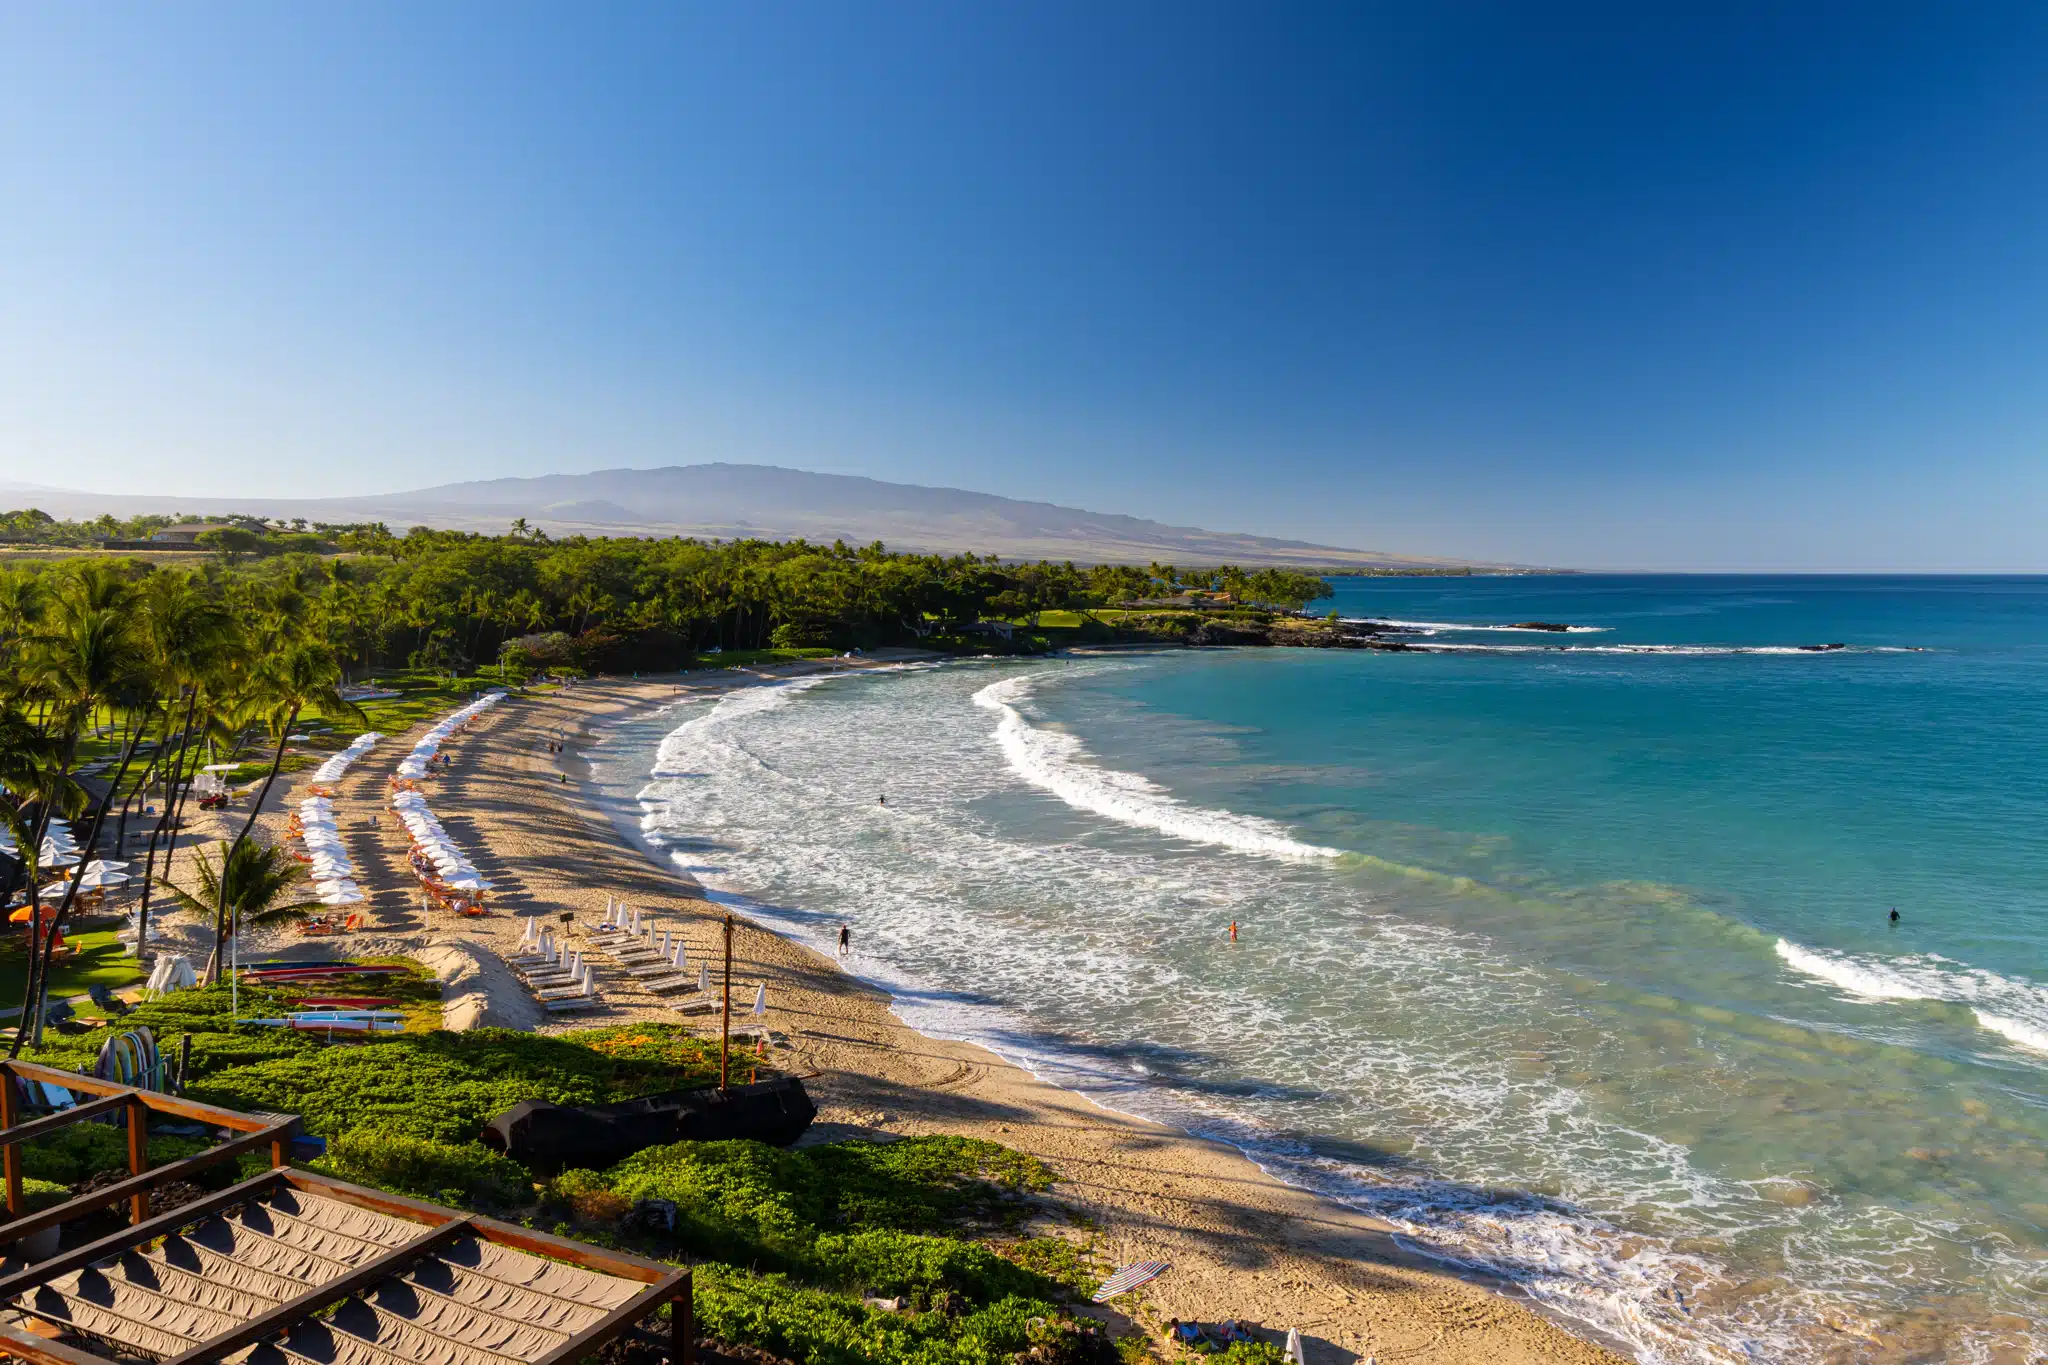 Mauna Kea Beach (Kauna'oa) is a Beach located in the city of Kamuela on Big Island, Hawaii